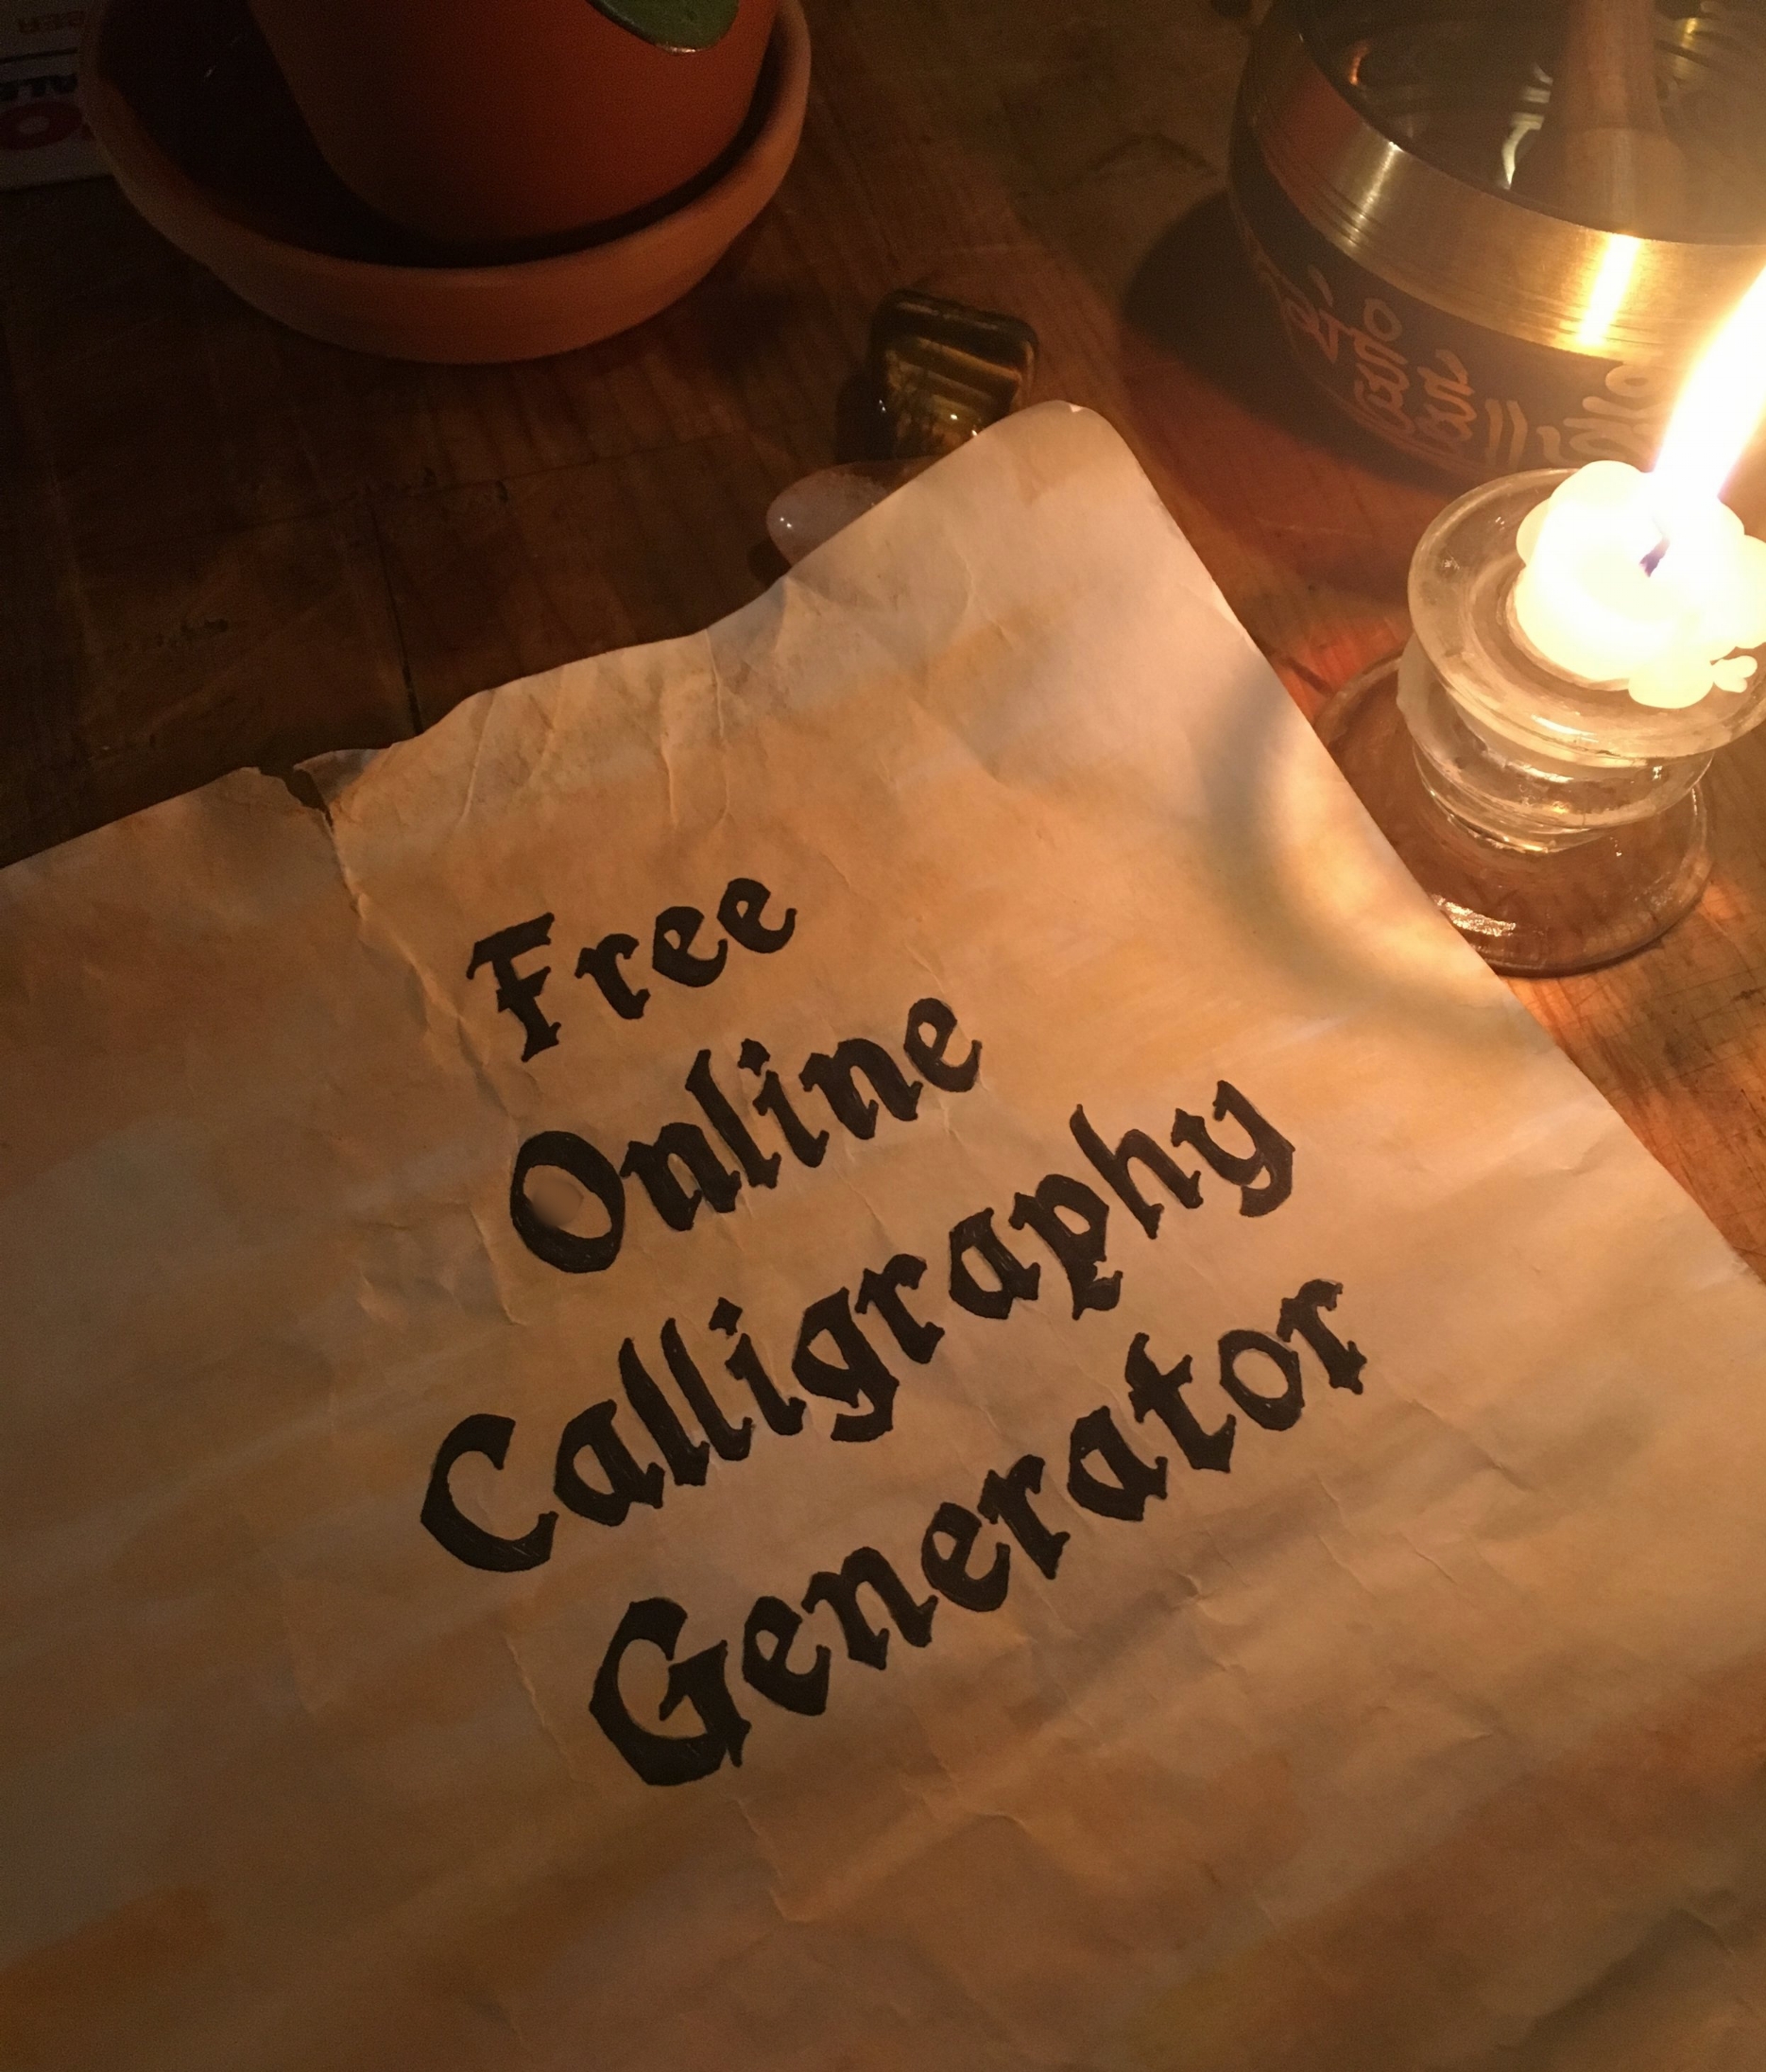 free online handwriting font generator